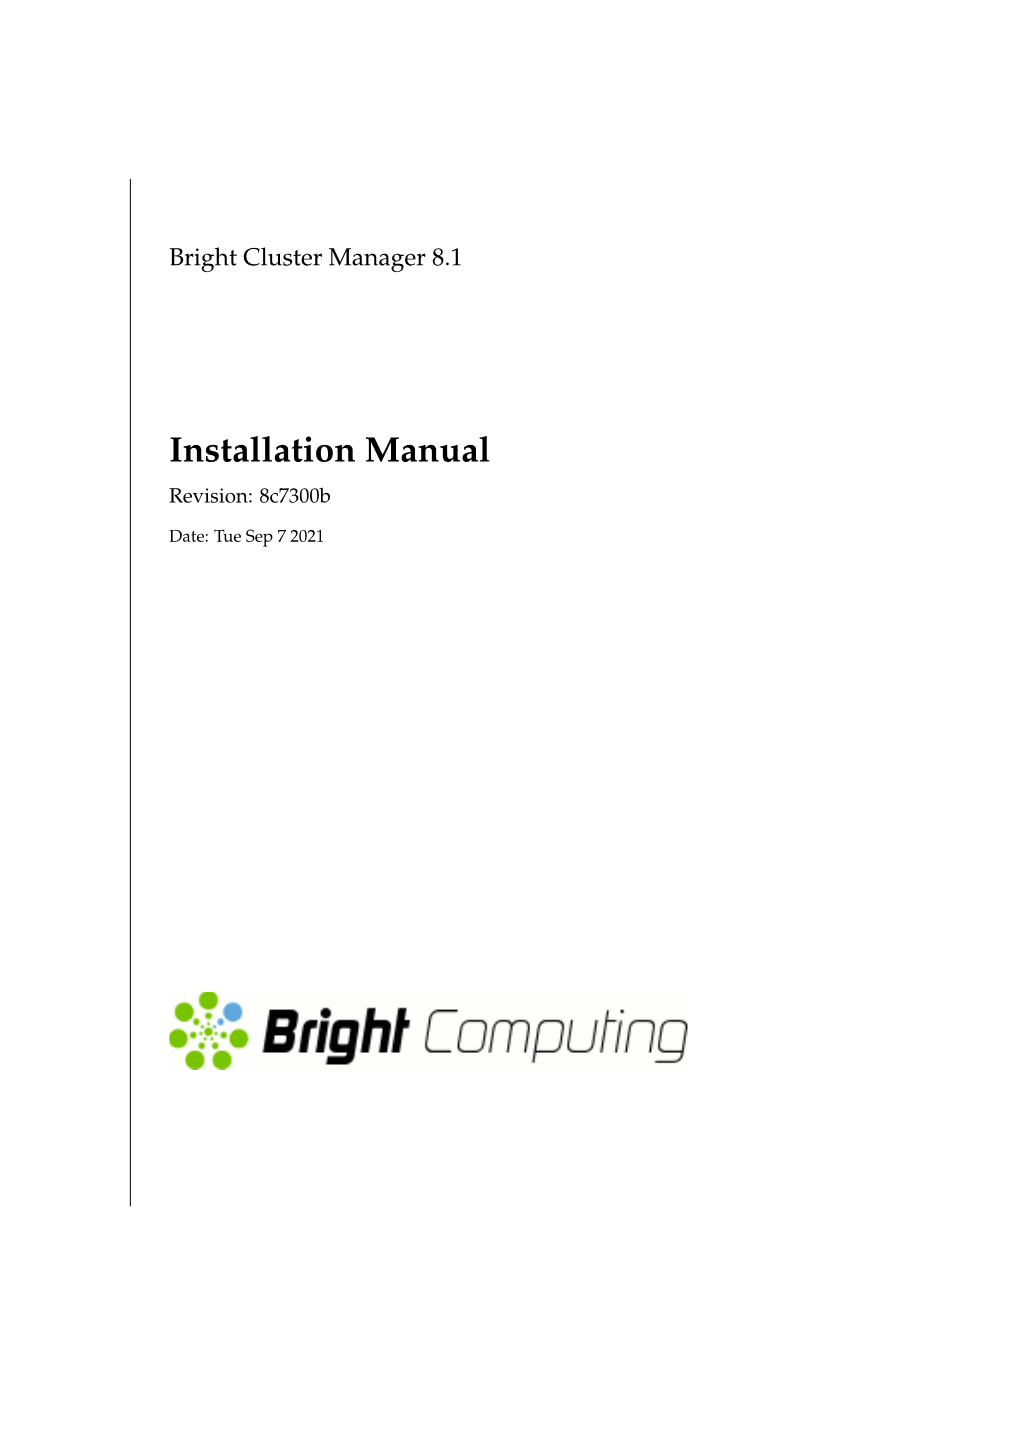 Installation Manual Revision: 8C7300b